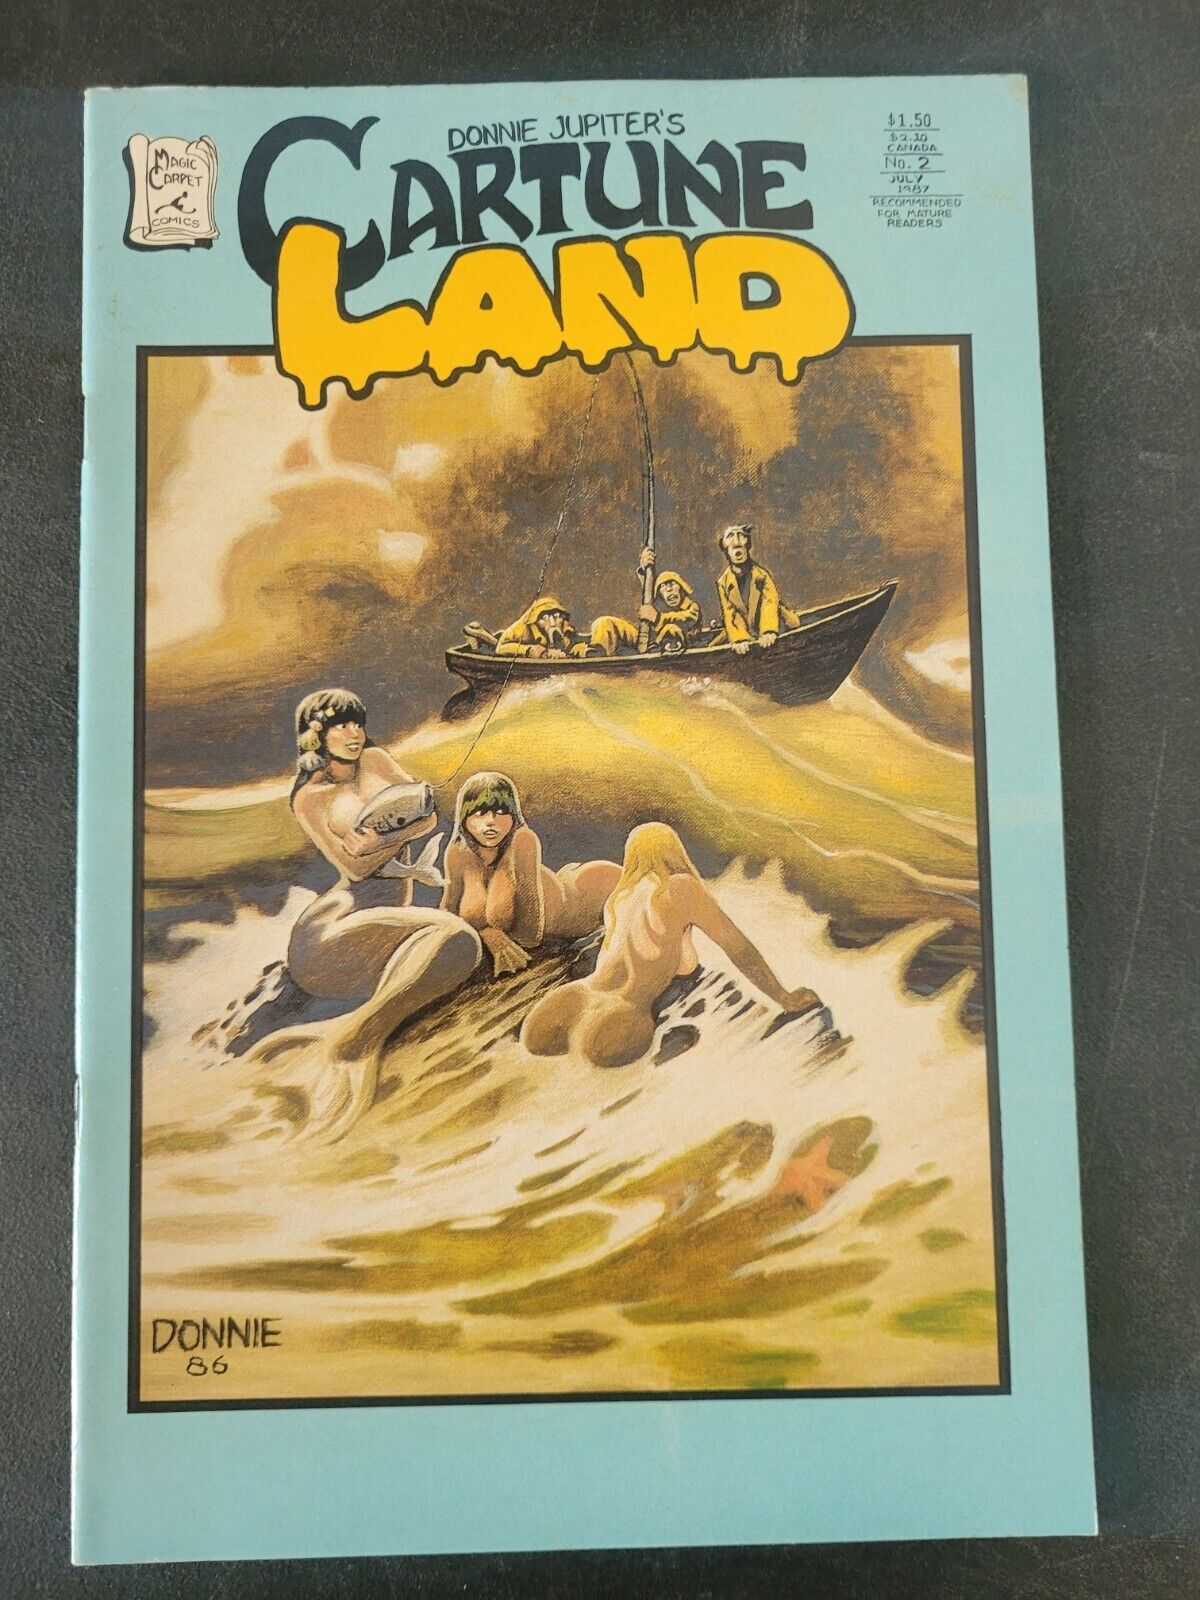 DONNE JUPITER'S CARTUNE LAND #2 (1987) MAGIC CARPET COMICS INDY CLASSIC